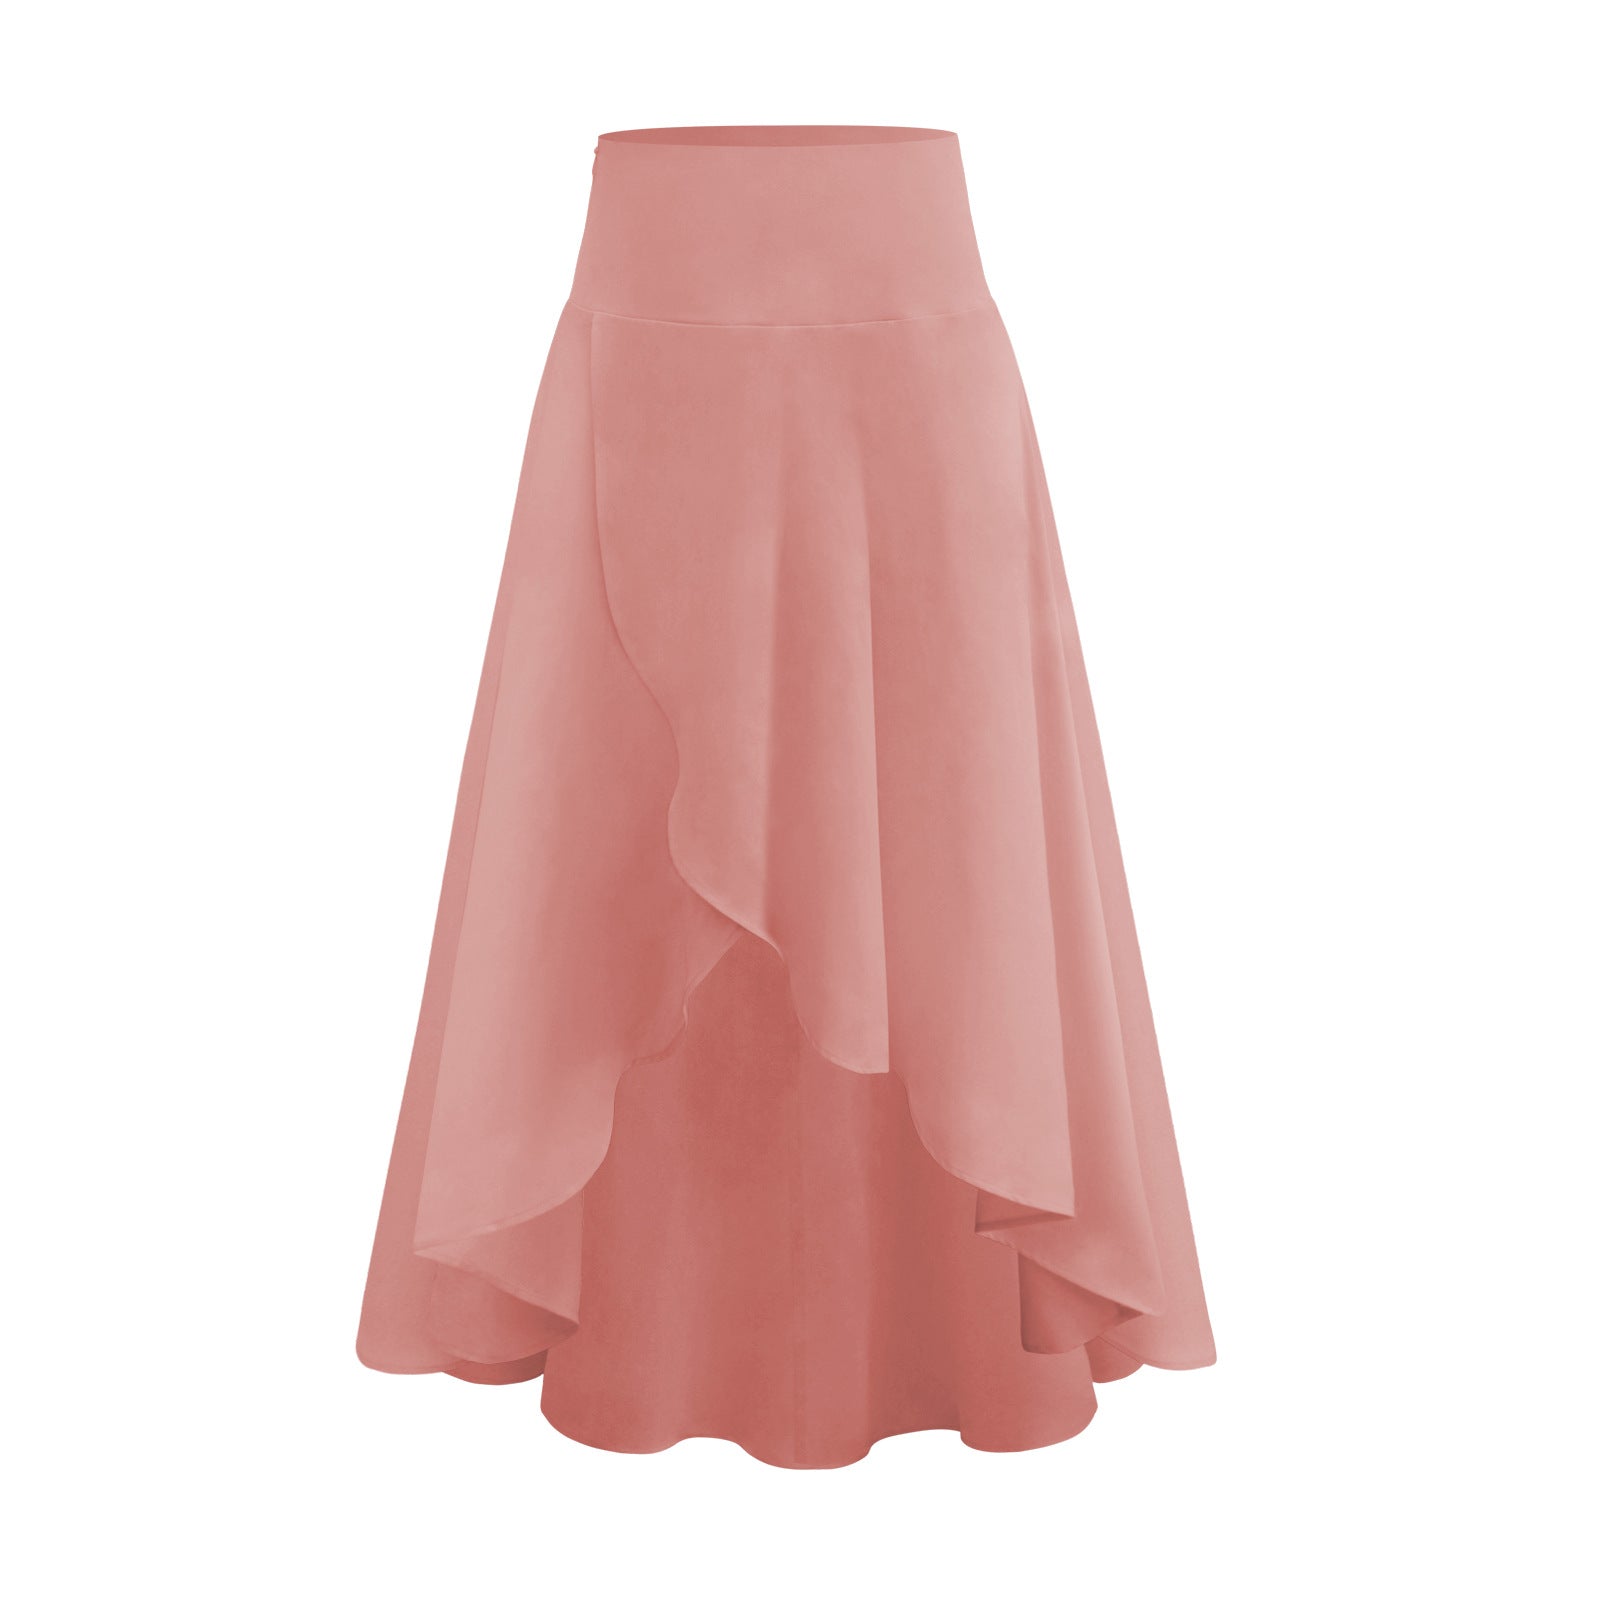 Women's Ruffled Solid Color Irregular Elegant Summer Wear Fashion Skirt